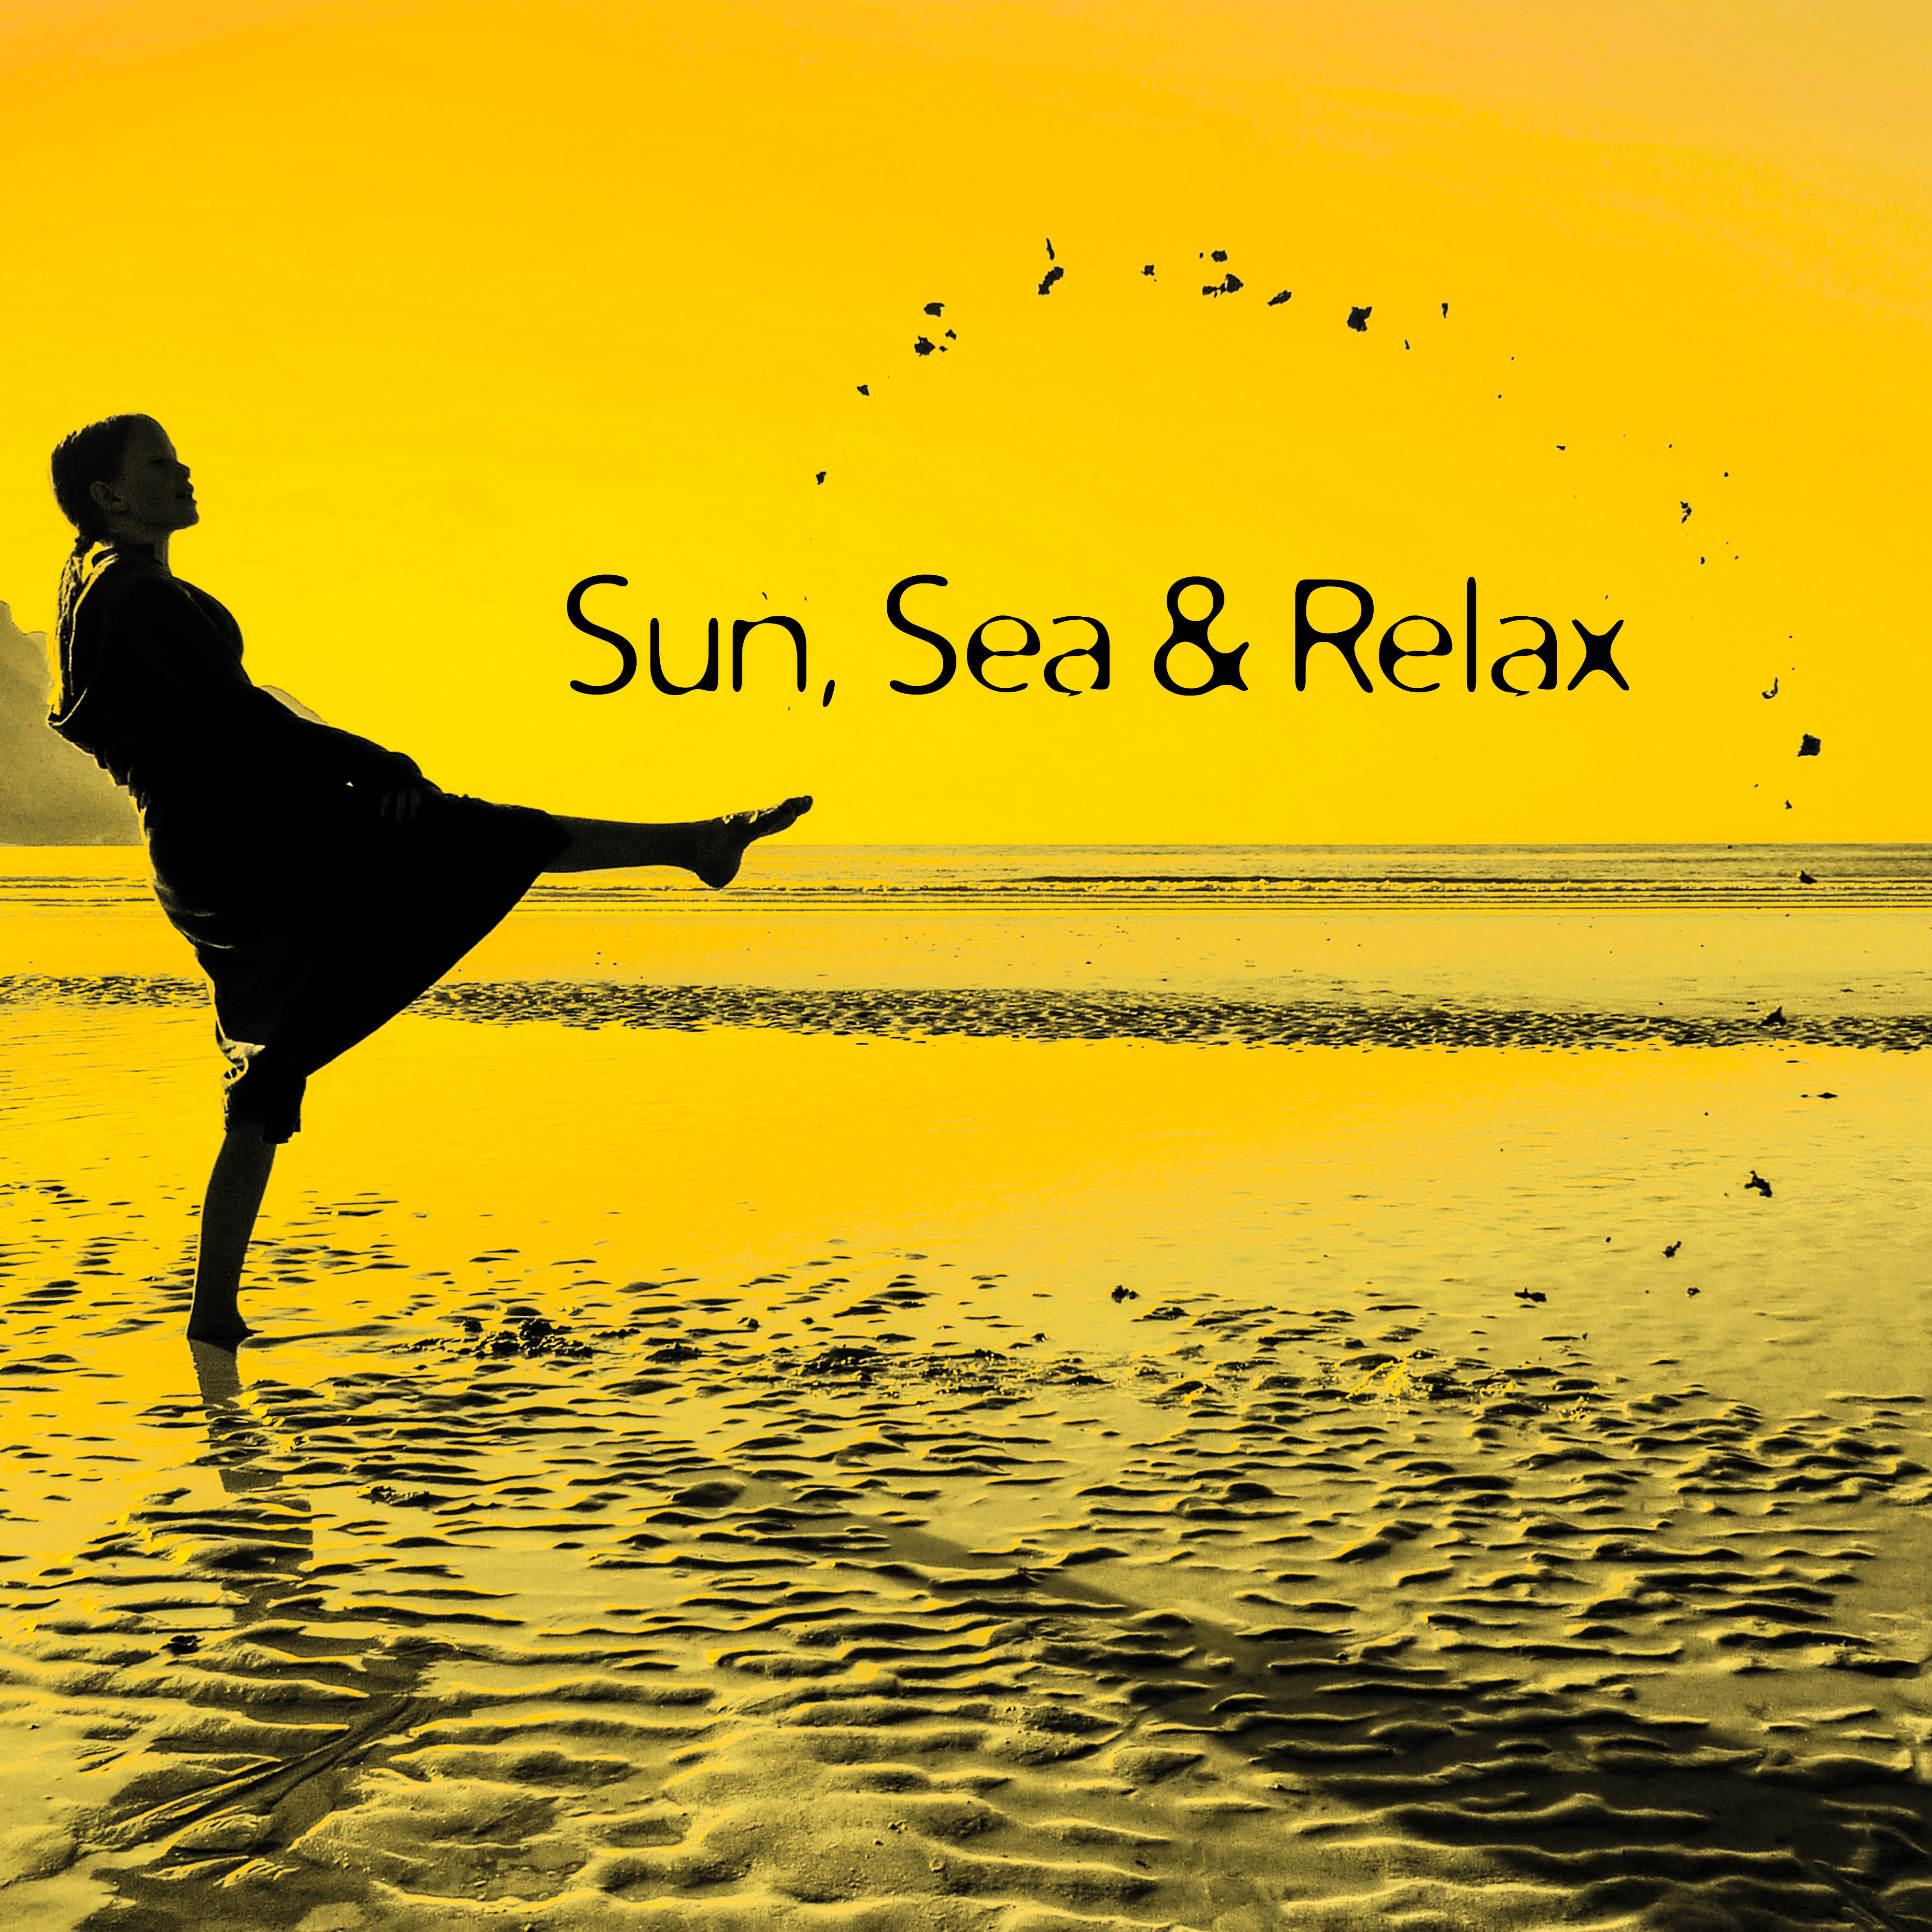 Sun, Sea & Relax – Beach Chill Out, Bahama Island, Rest, Ibiza Summertime